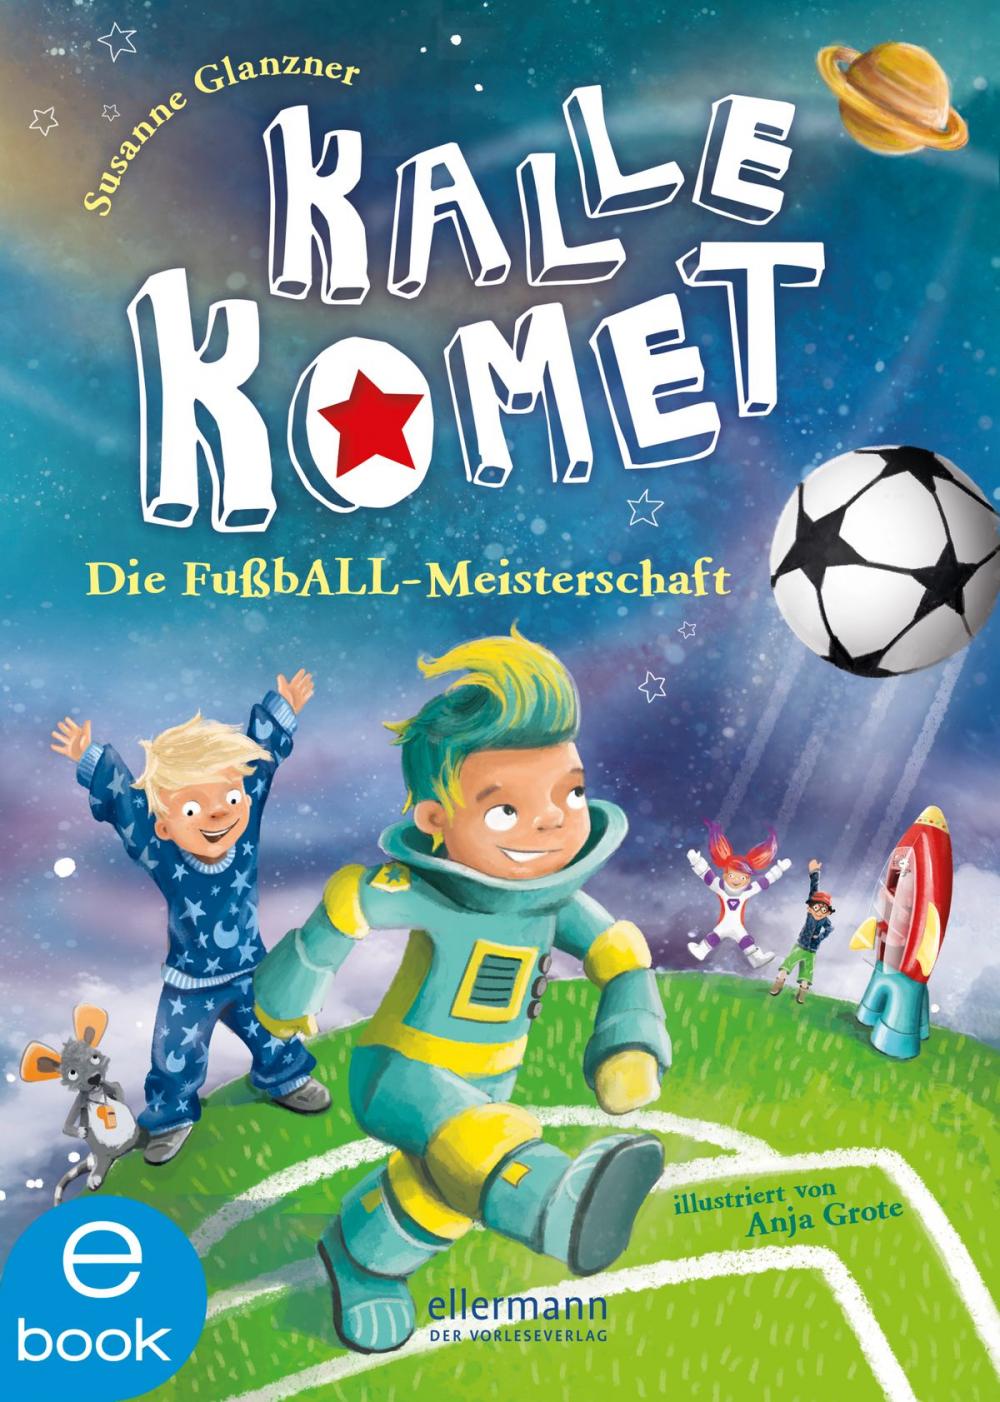 Big bigCover of Kalle Komet. Die FußbALL-Meisterschaft